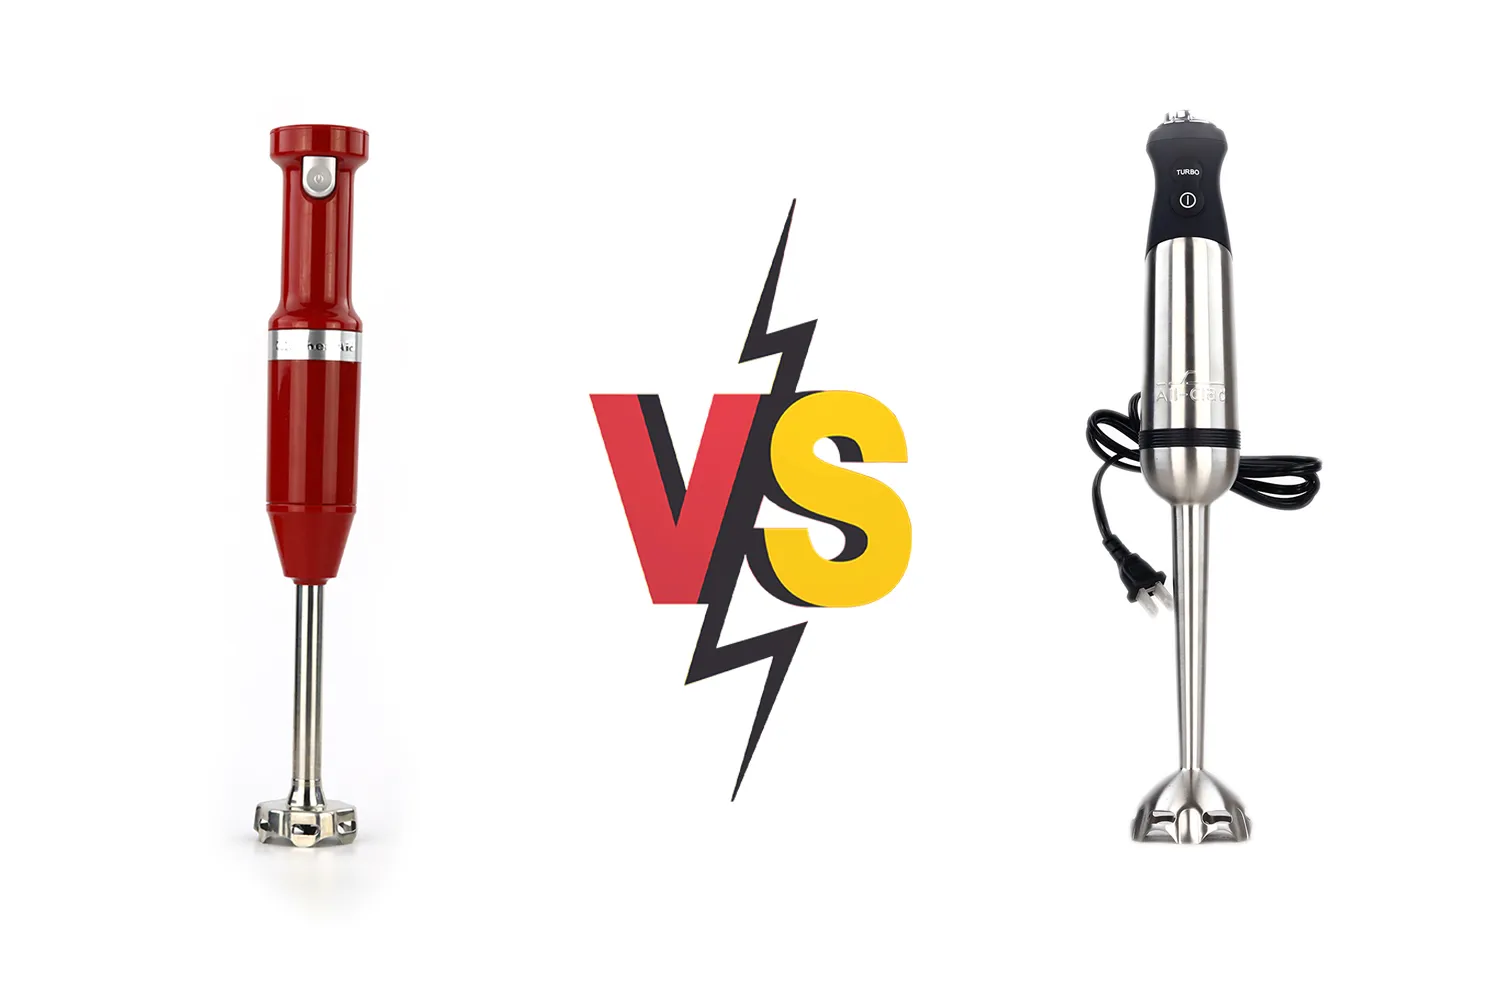 Cheap vs expensive hand blender kits:  Basics corded vs. KitchenAid  cordless 